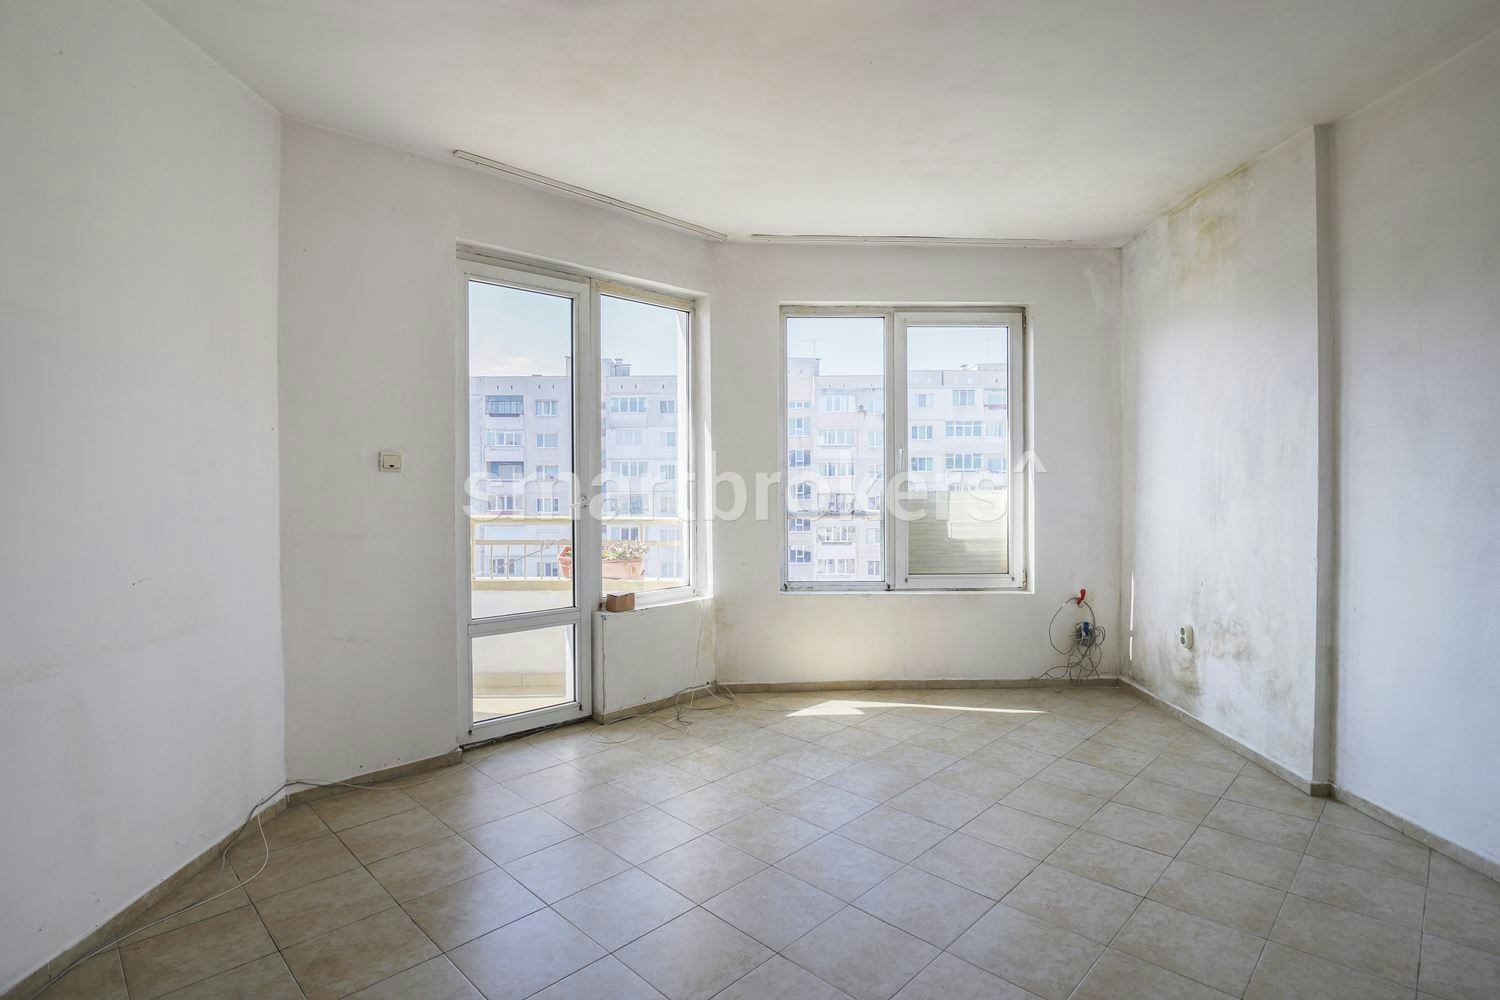 Panoramic one-bedroom brick apartment in Lyulin 9